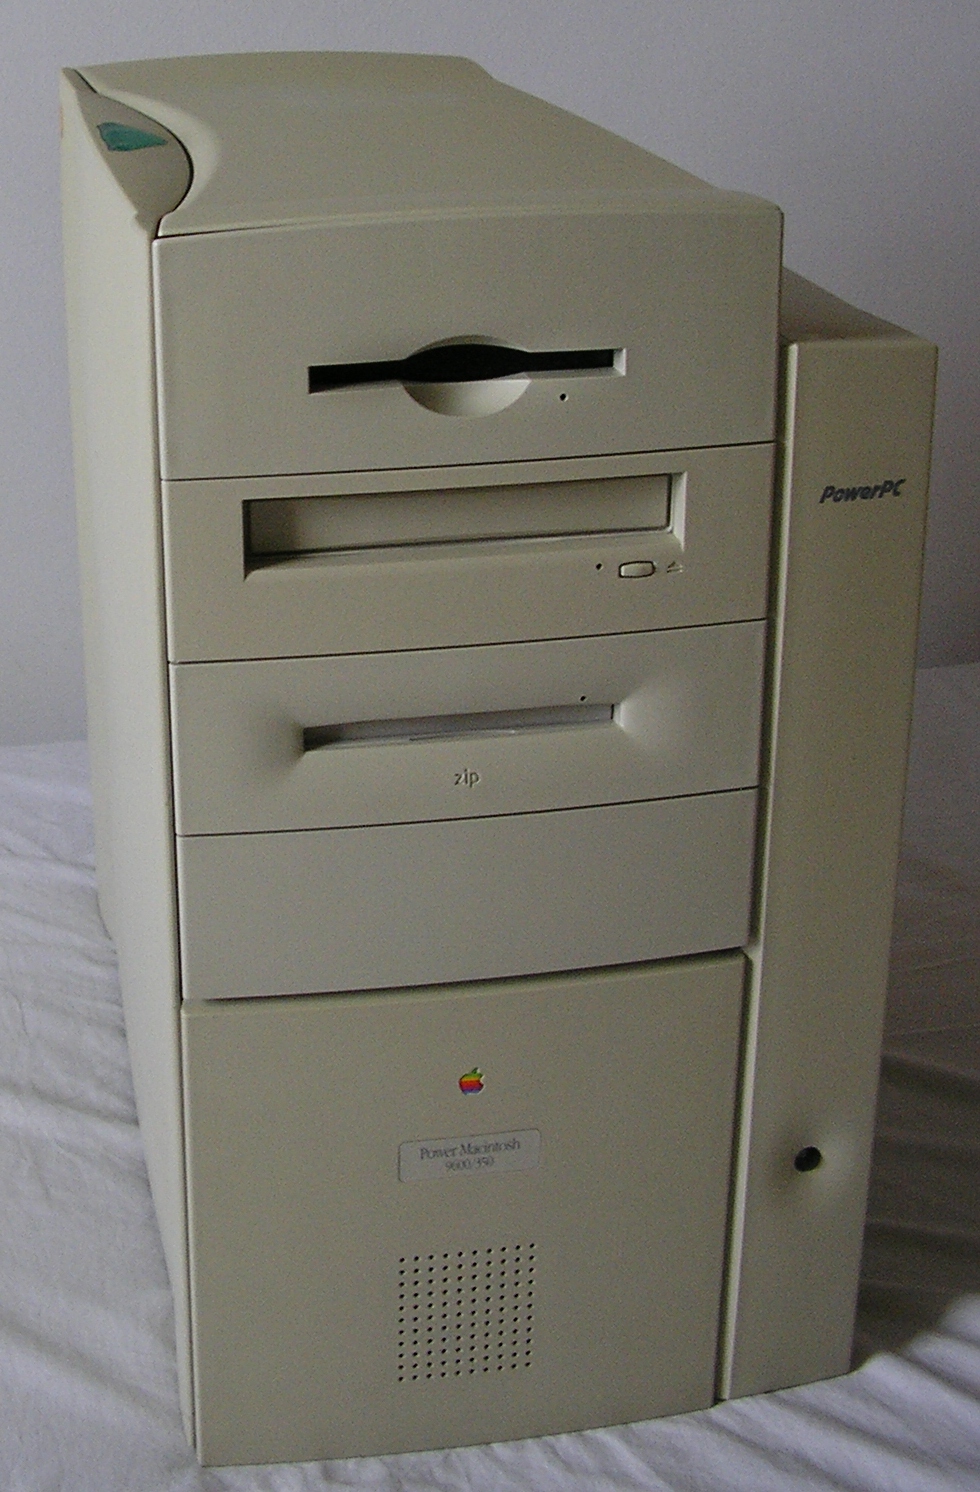 Power Macintosh 9600 - Wikipedia